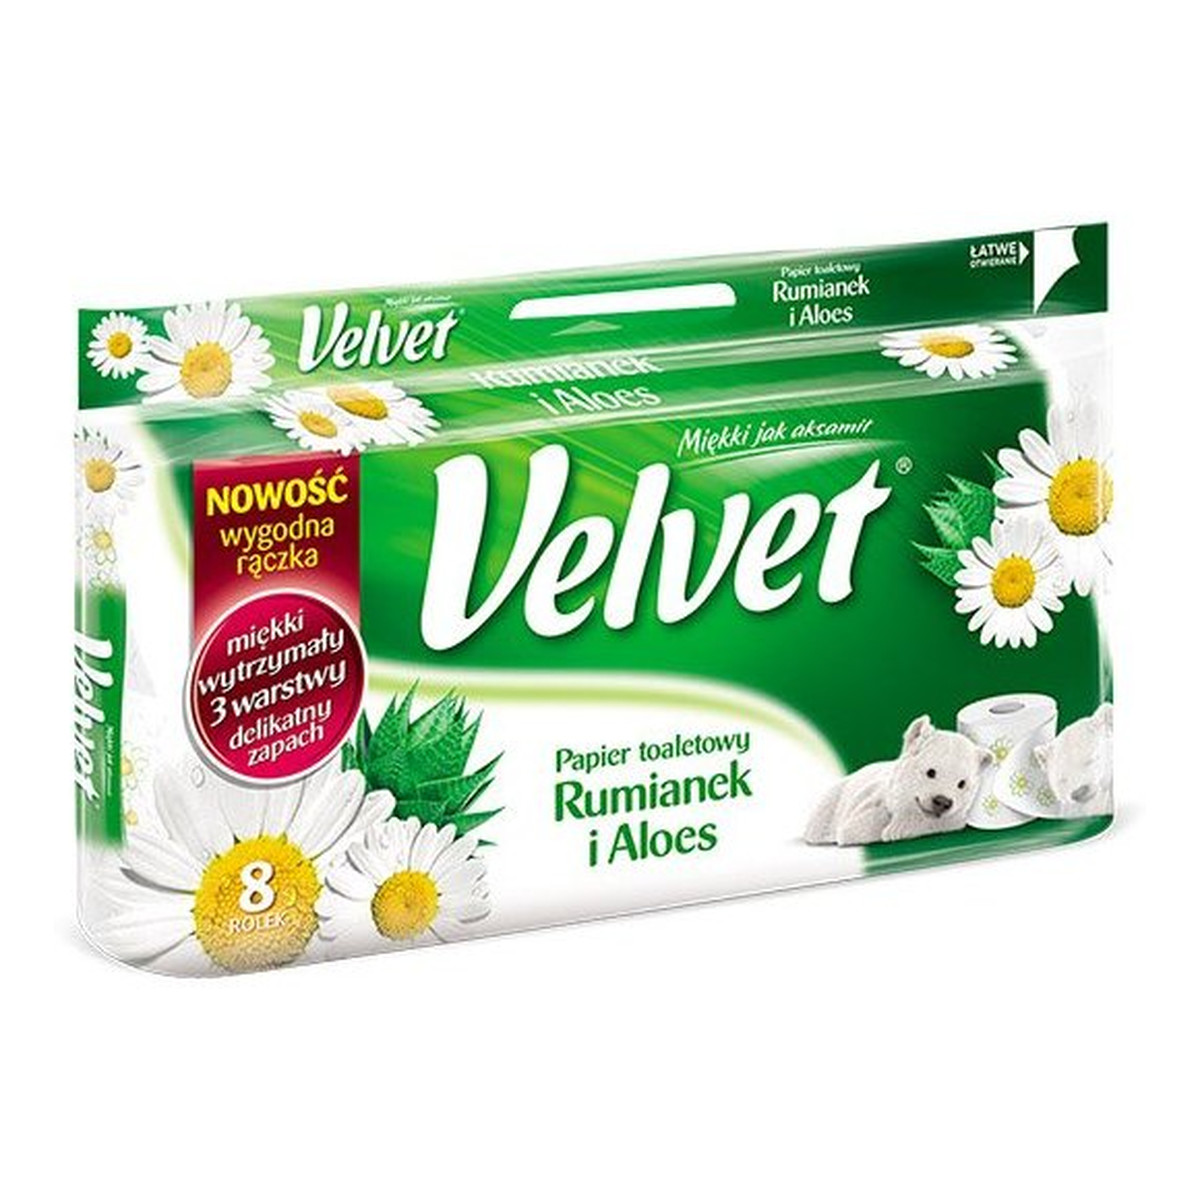 Velvet Papier toaletowy zapachowy Rumianek i Aloes 8rolek